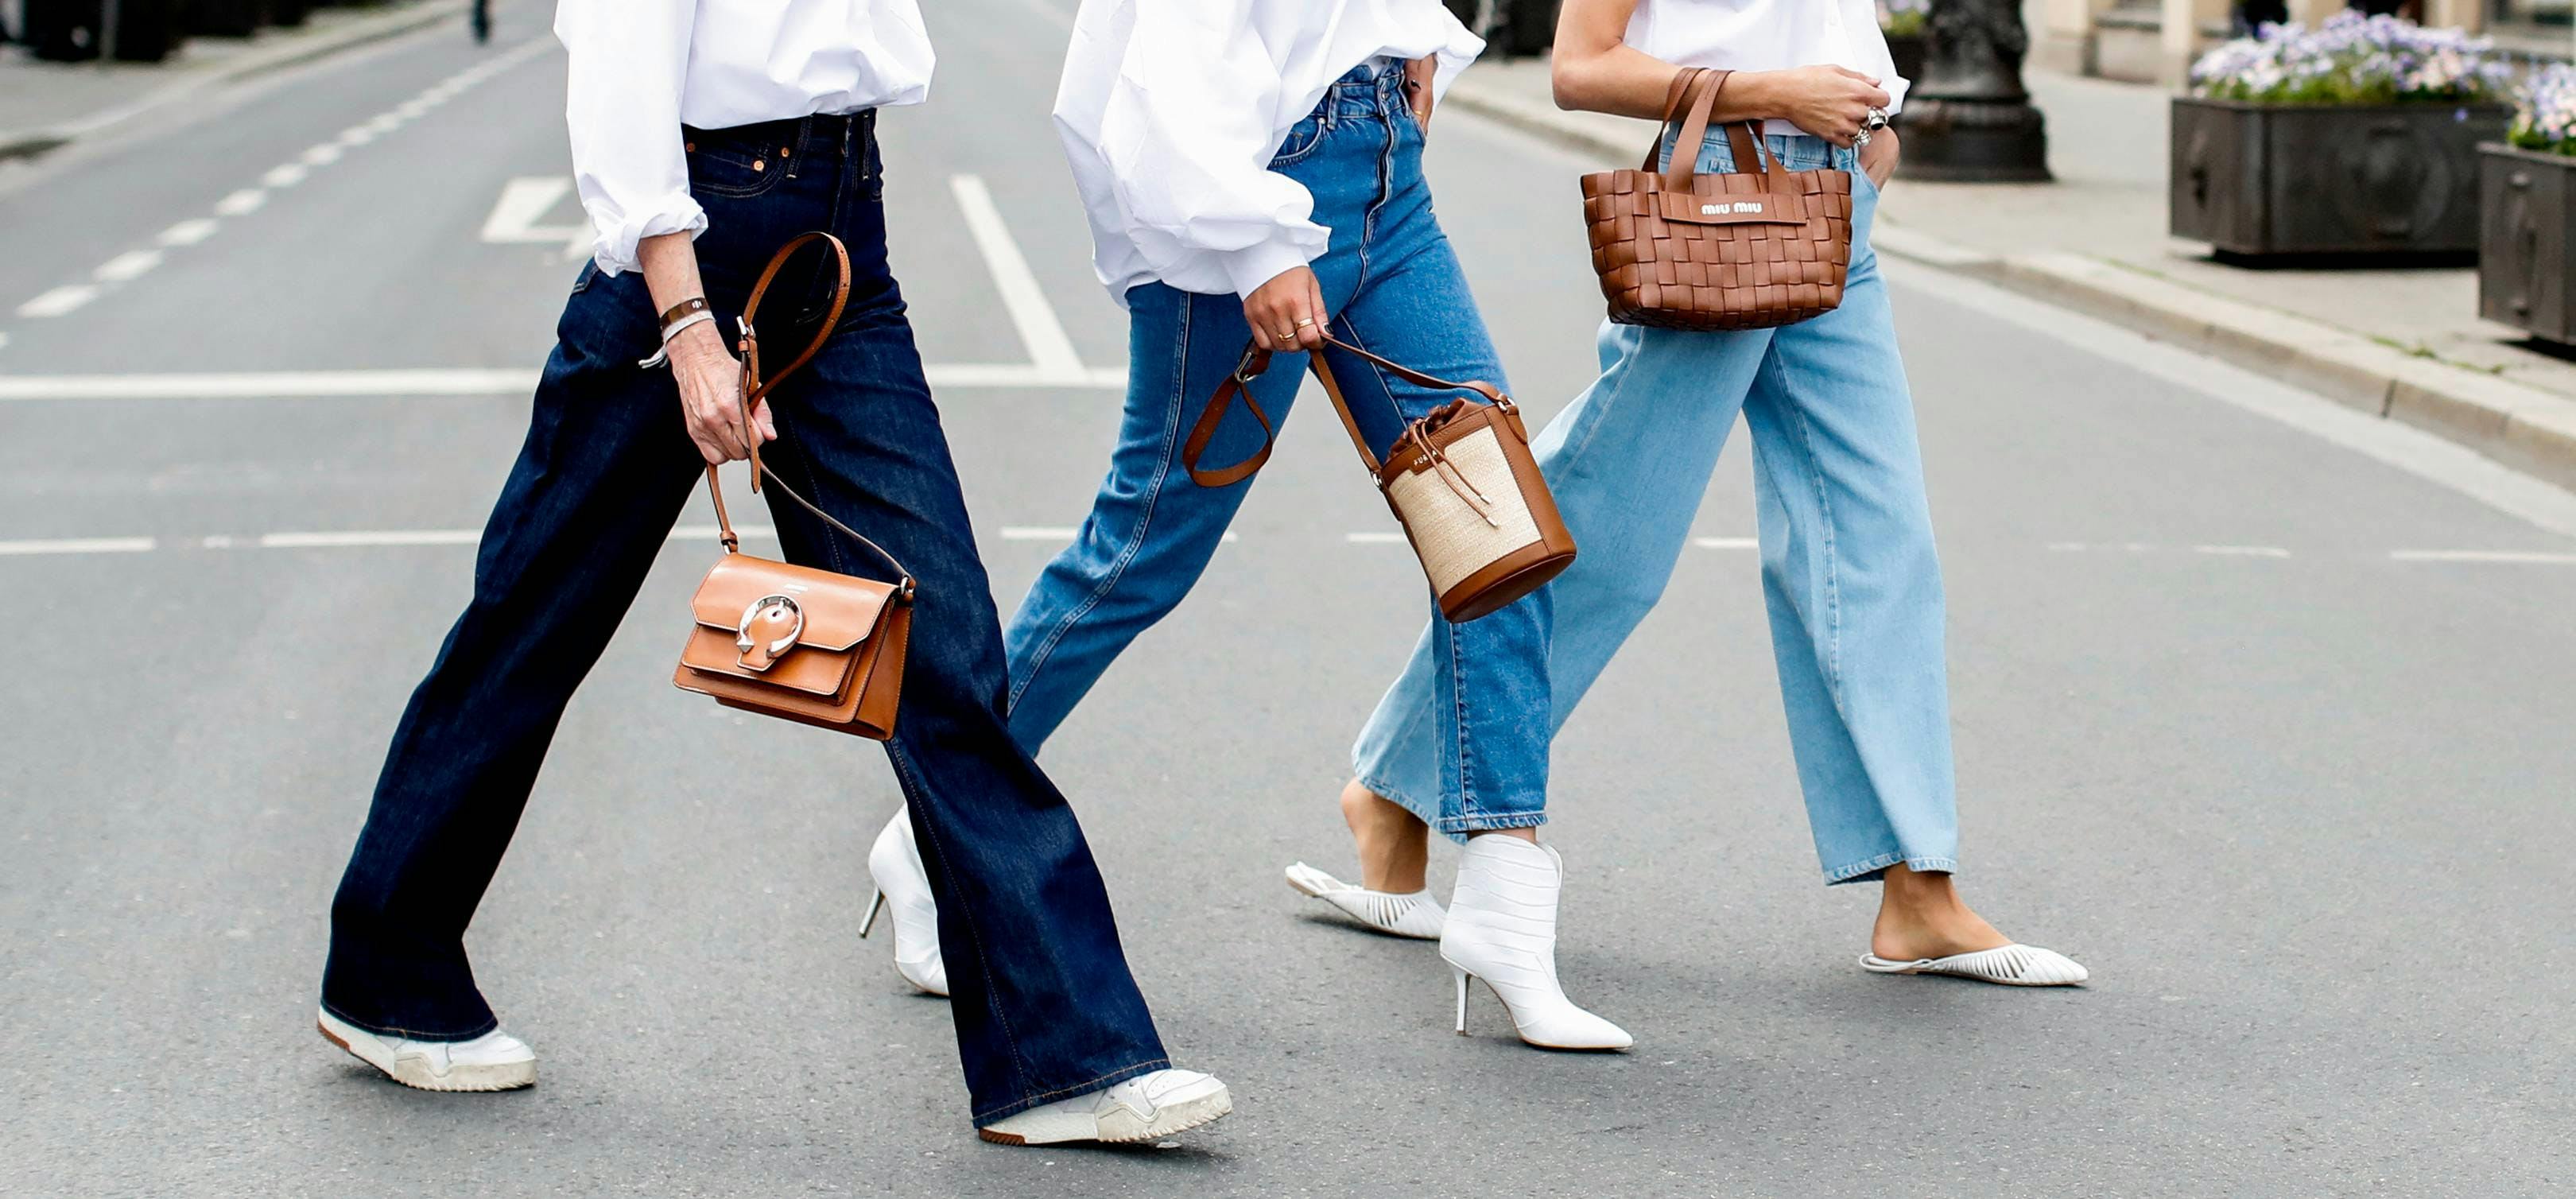 clothing apparel footwear person human shoe handbag accessories bag pants